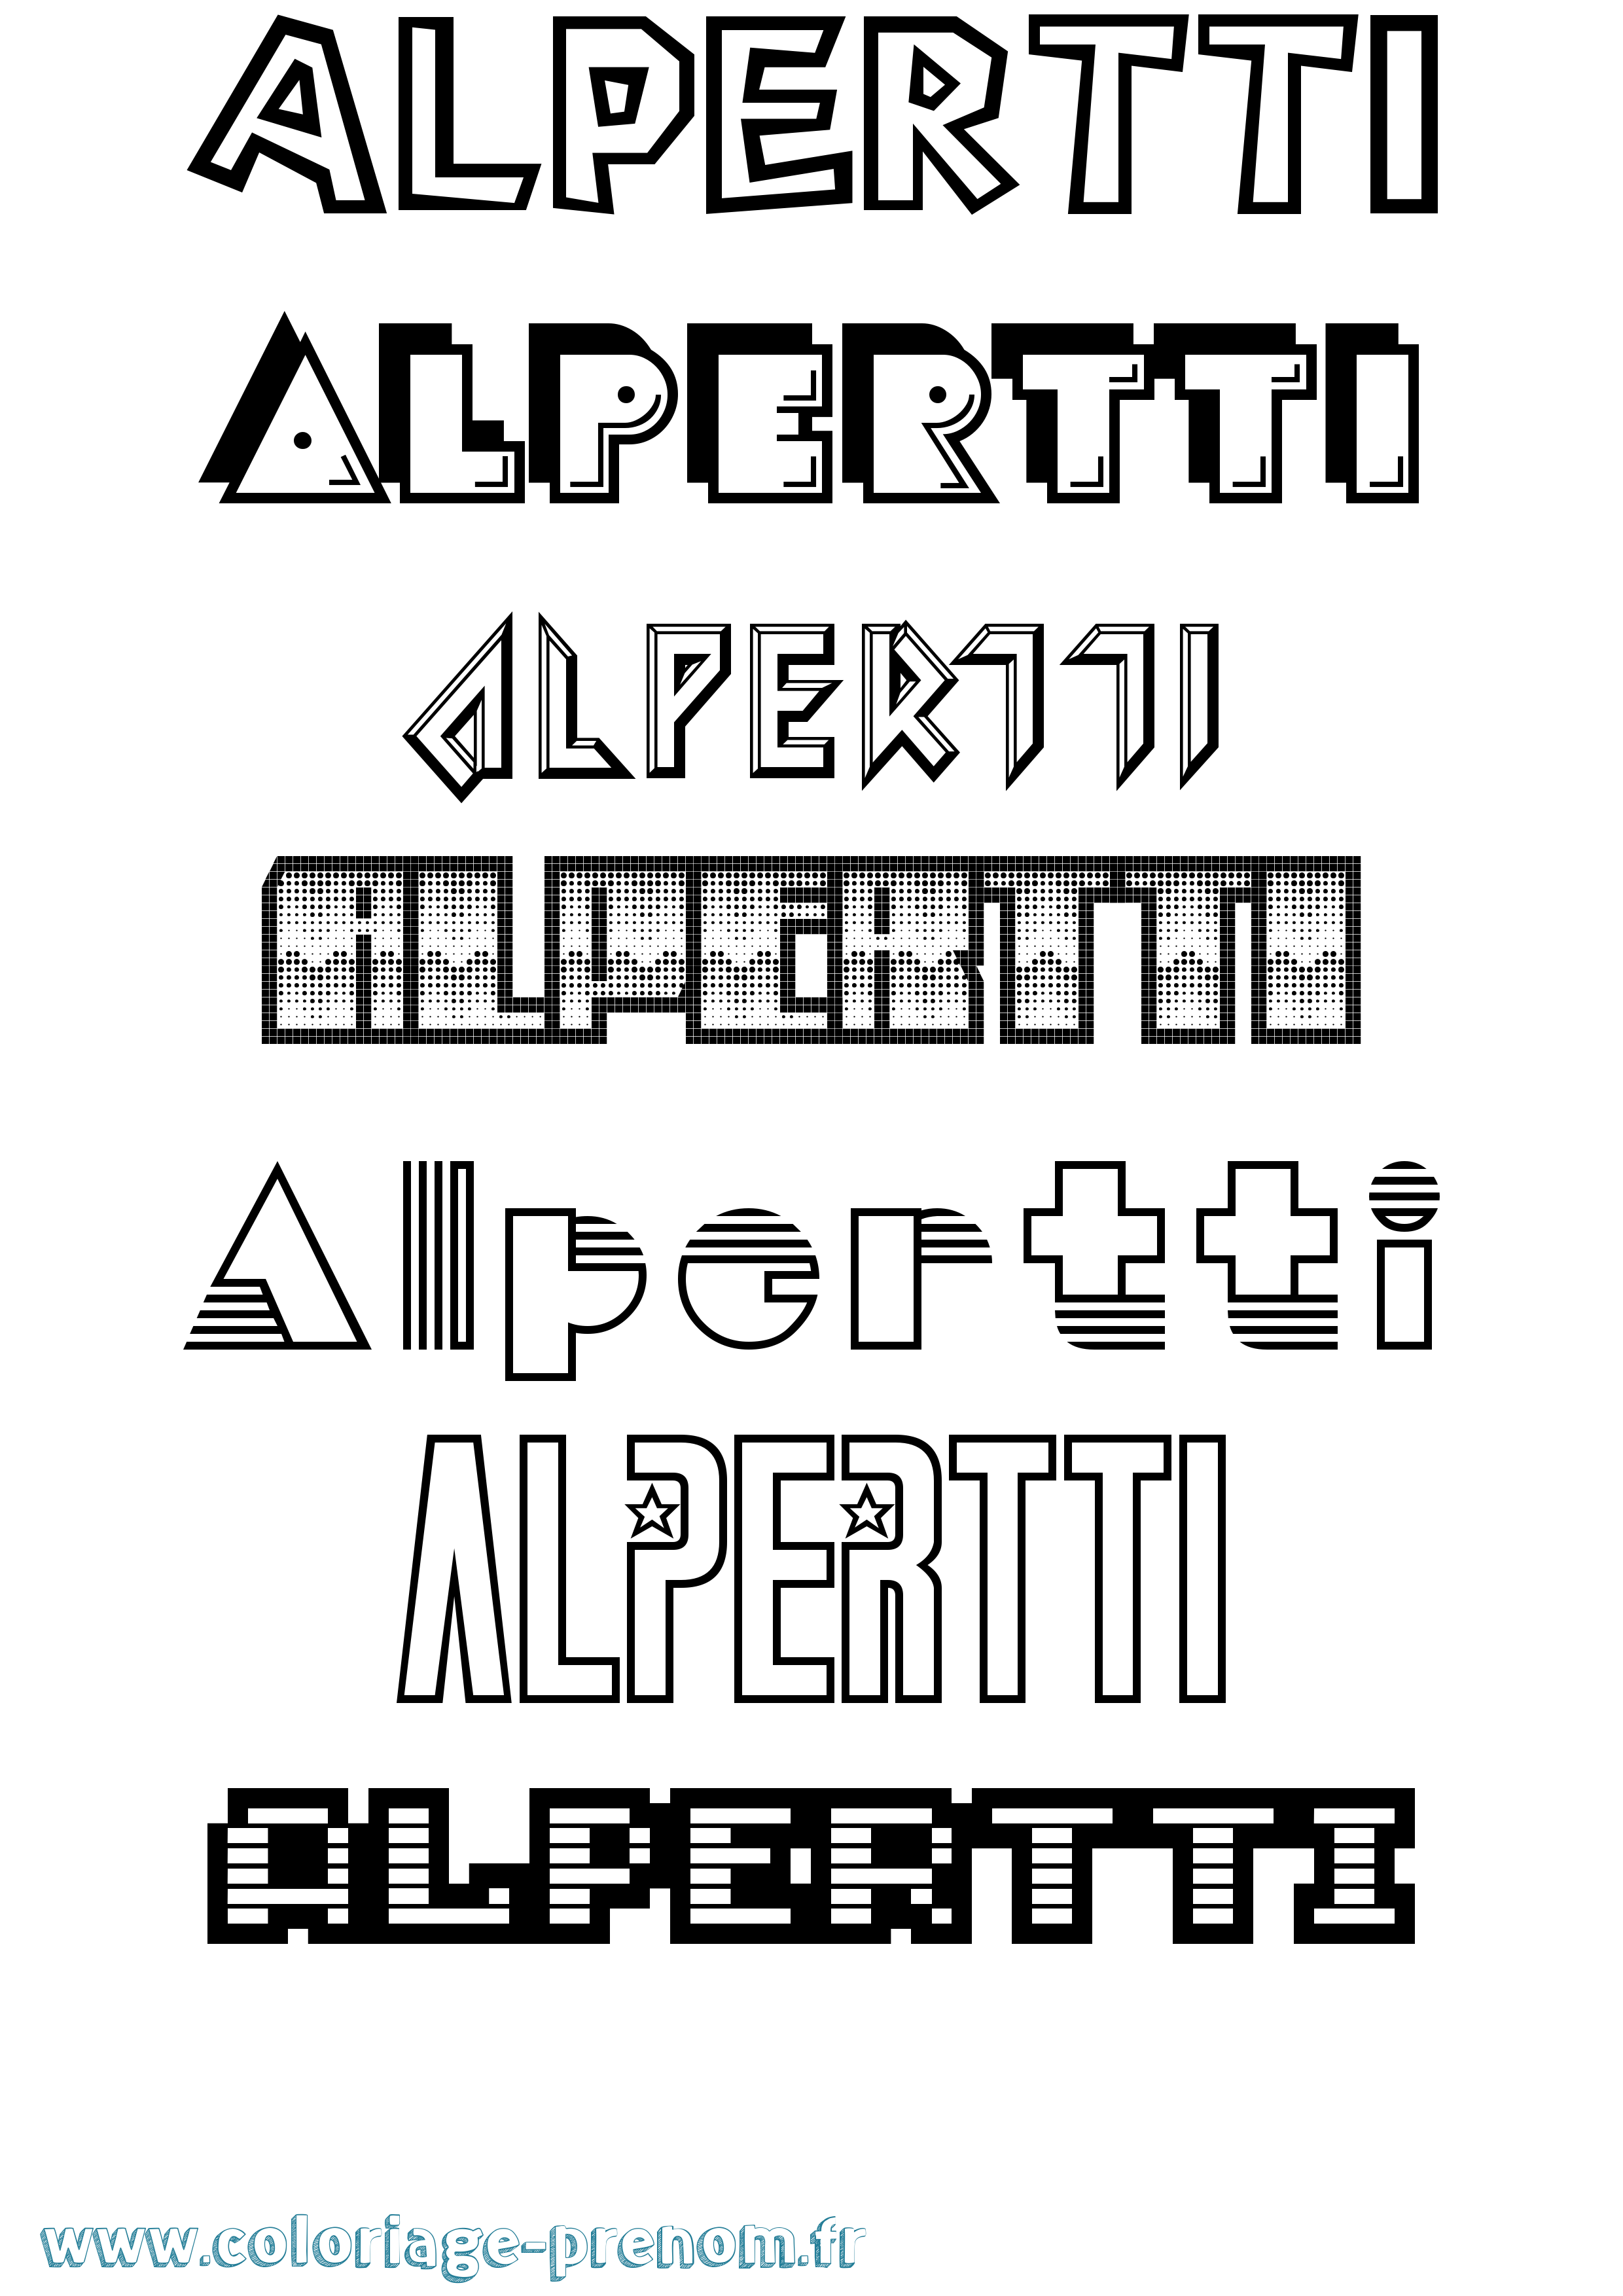 Coloriage prénom Alpertti Jeux Vidéos